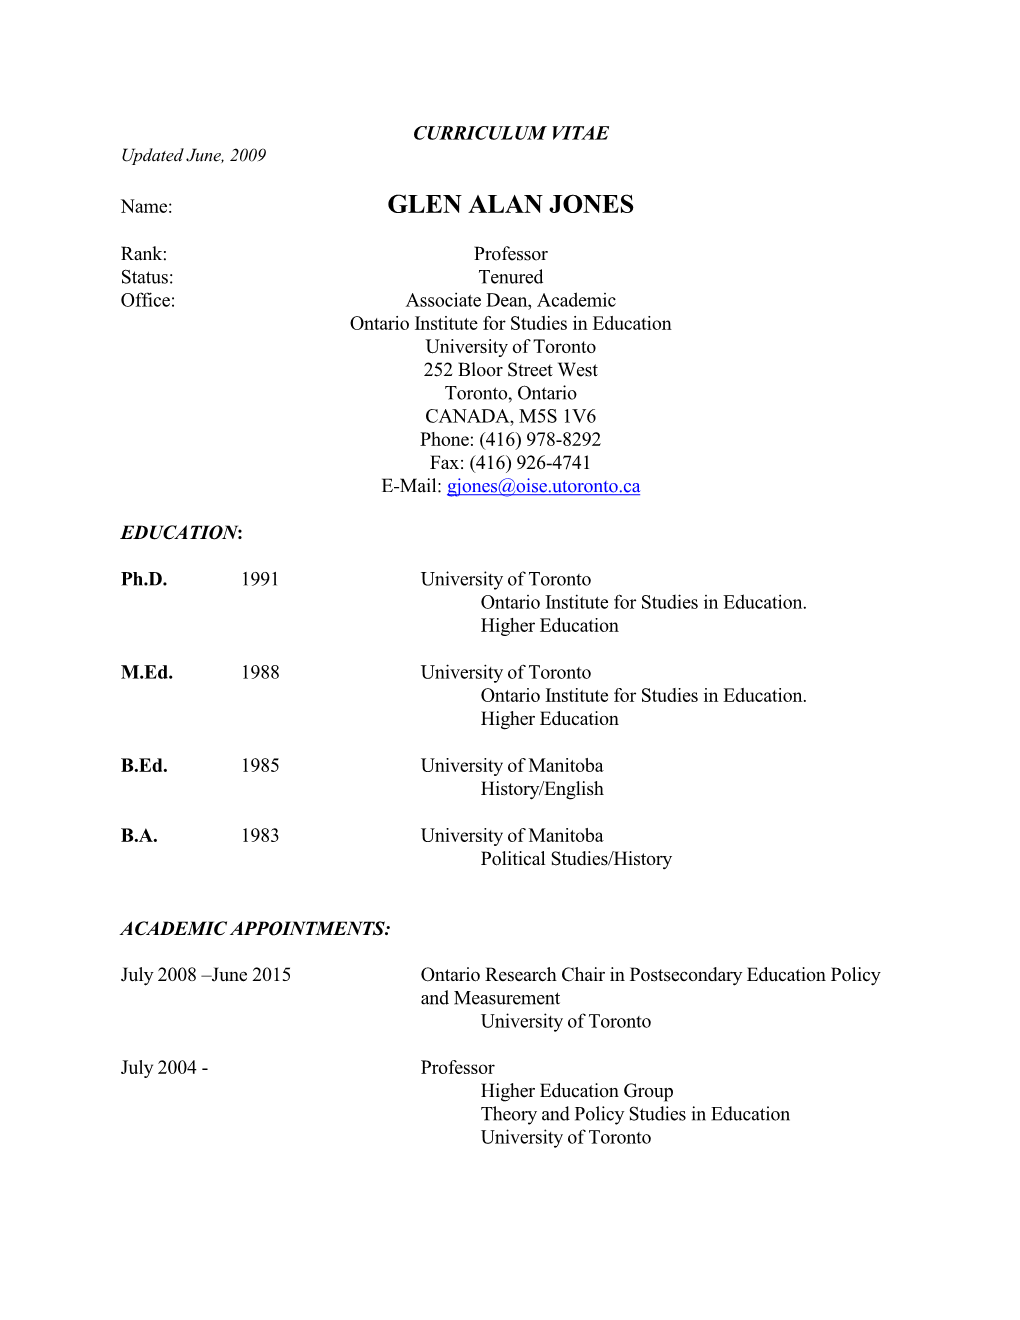 Glen Alan Jones